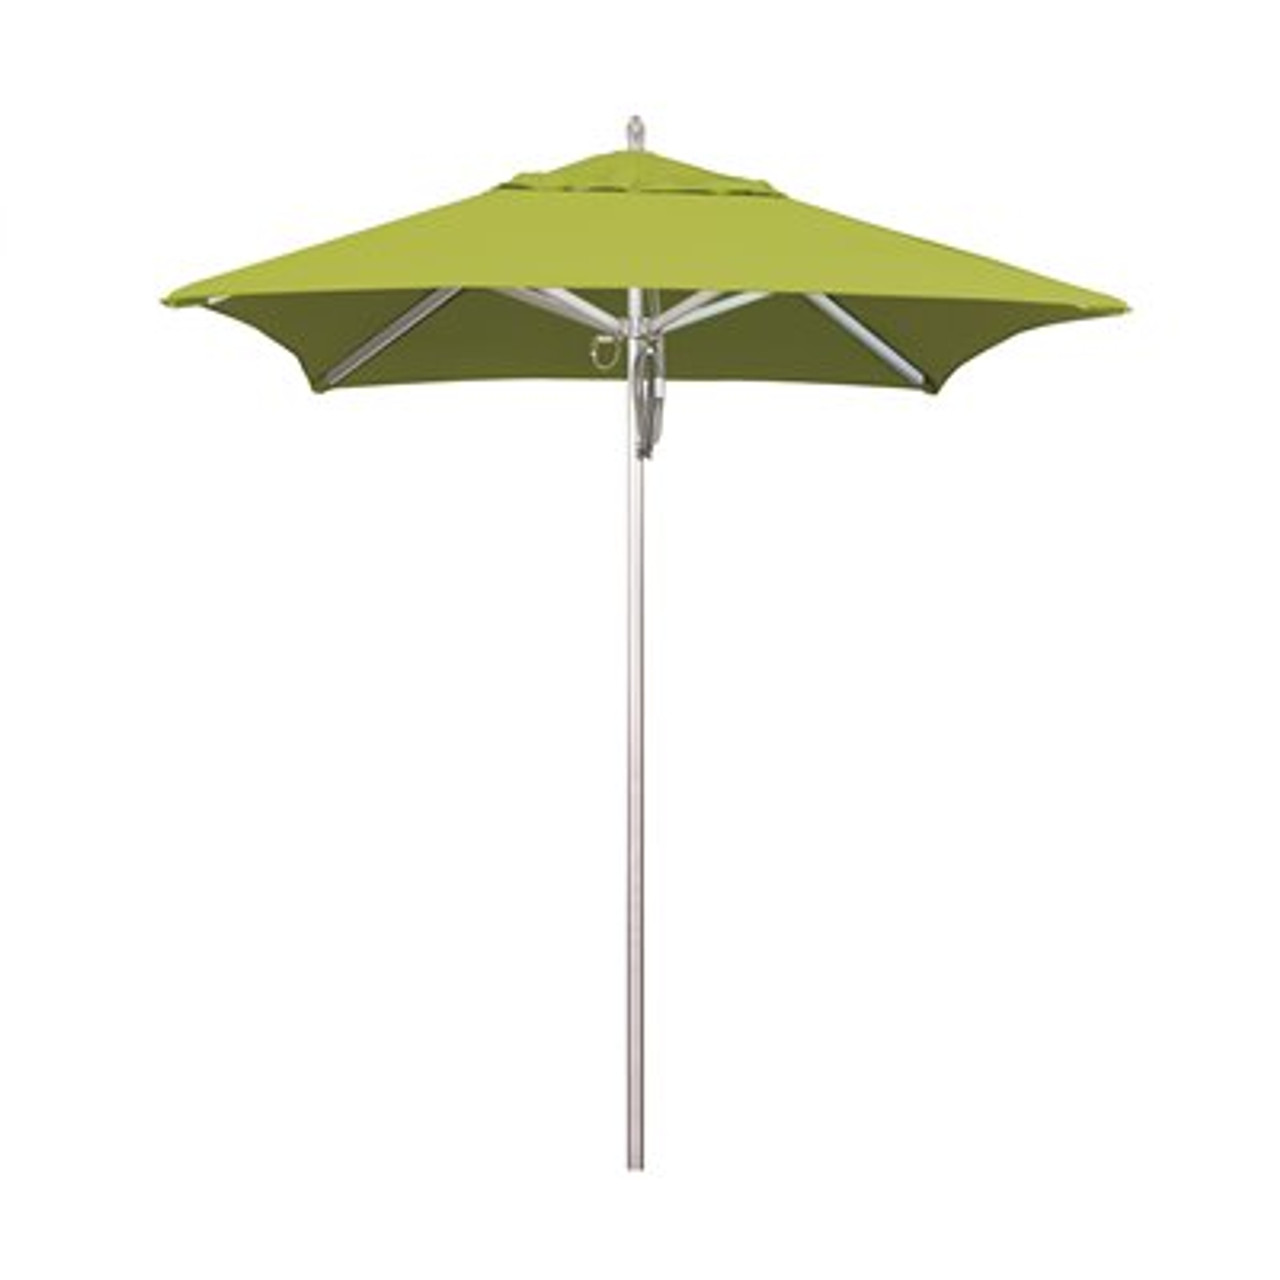 California Umbrella 6 ft. Silver Aluminum Commercial Market Patio Umbrella with Pulley Lift in Macaw Sunbrella